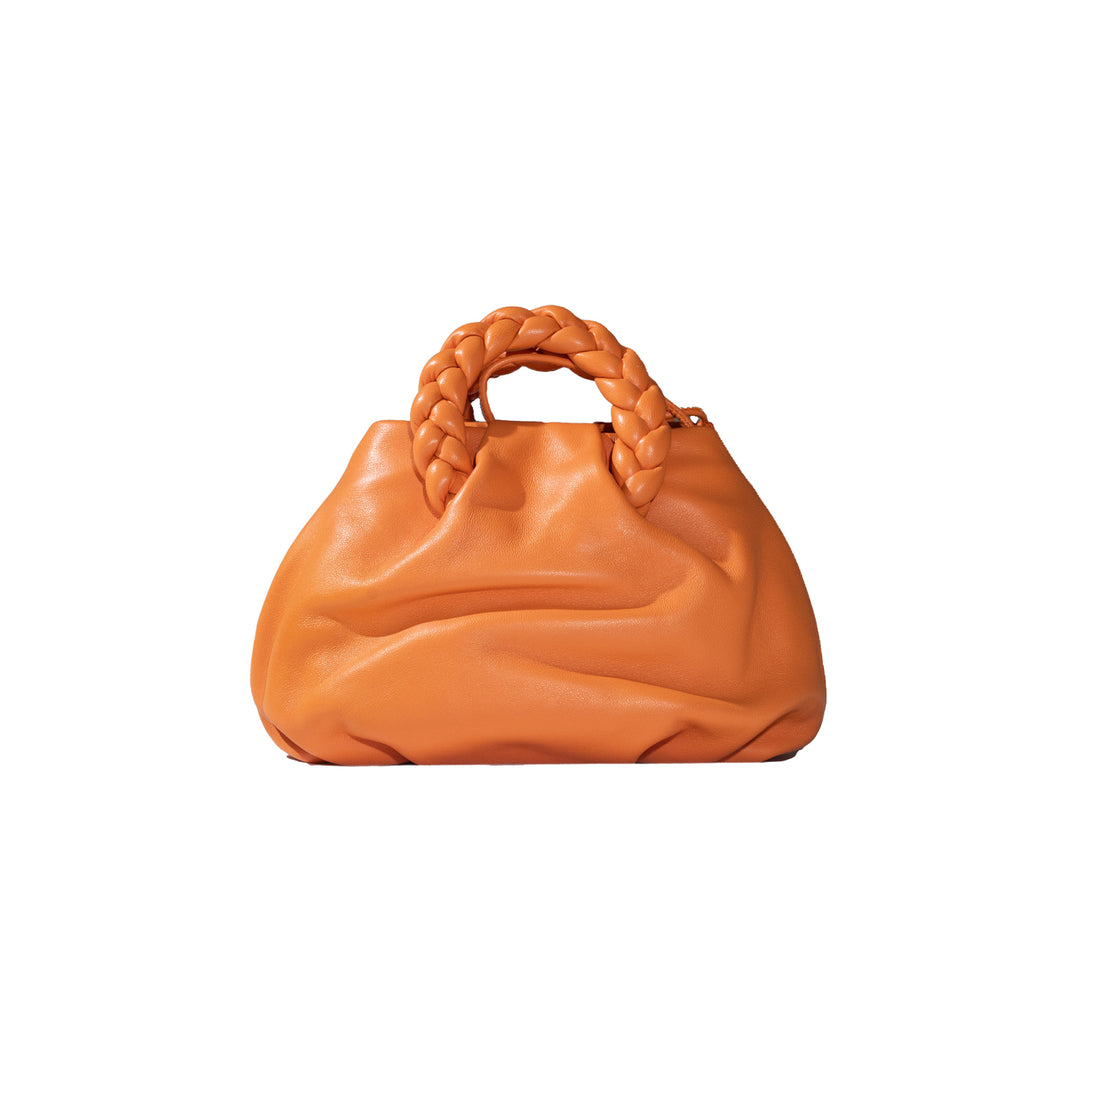 HEREU Bombon Leather Top Handle Bag